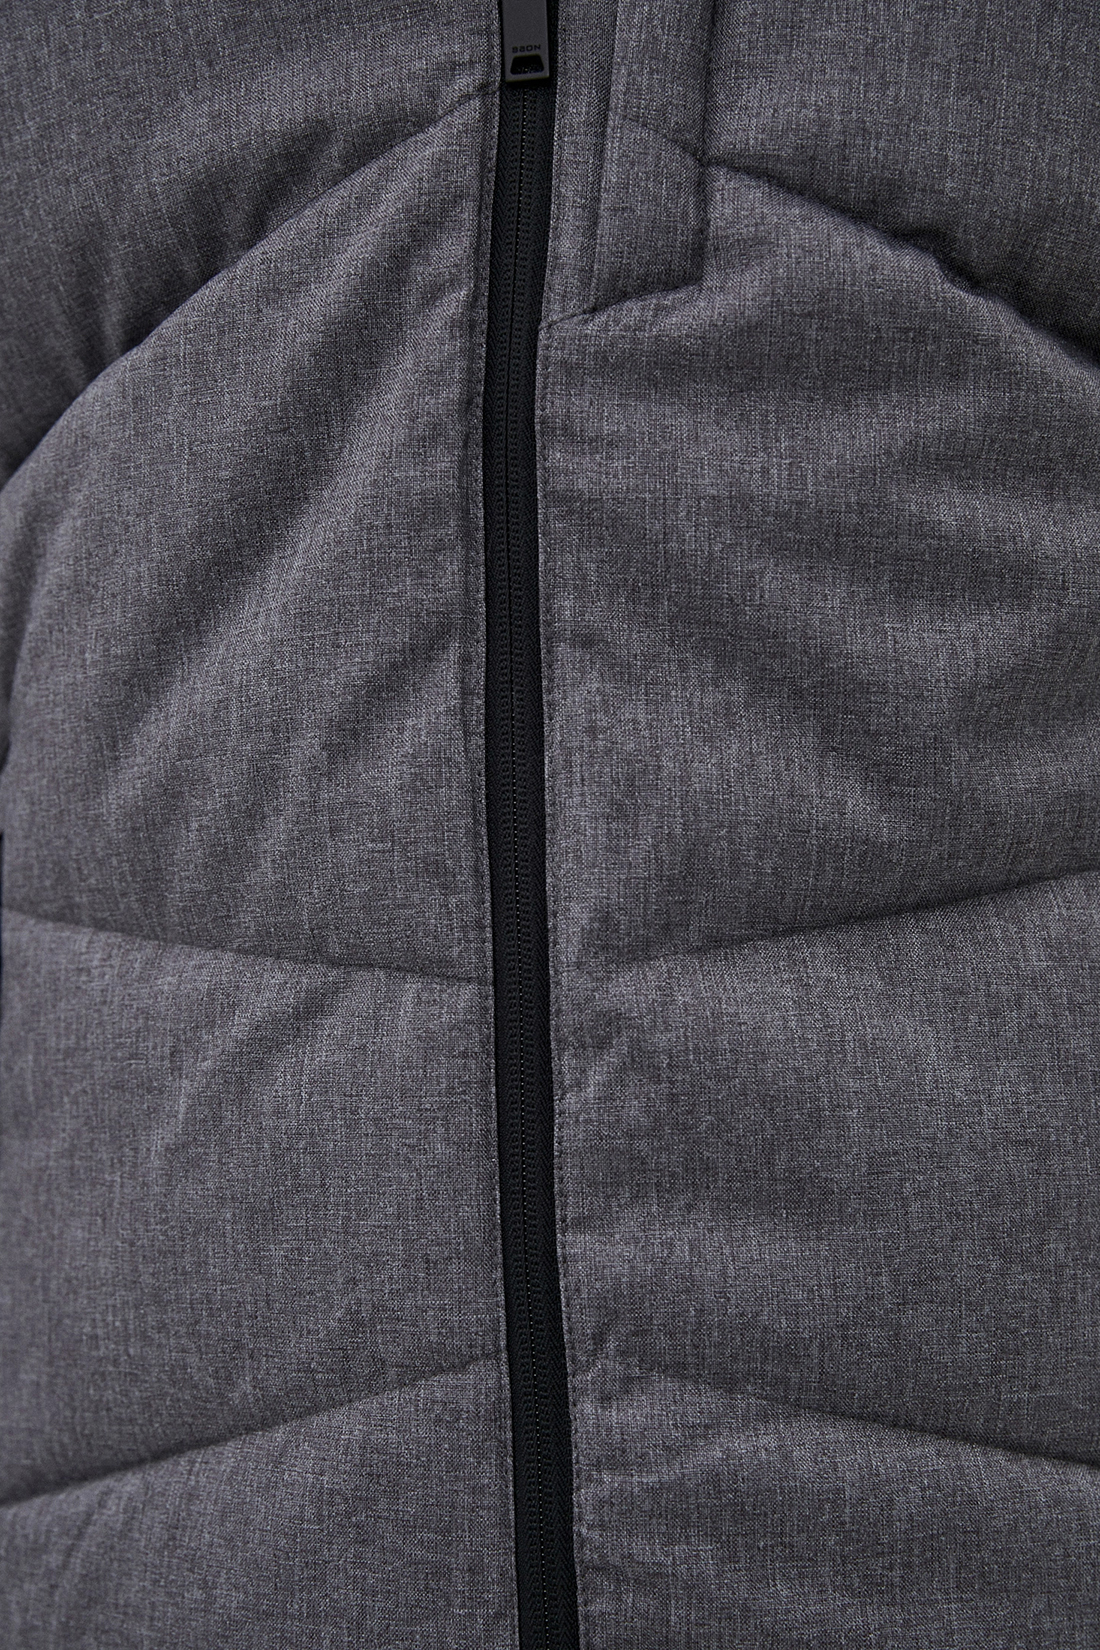 Куртка (Эко пух) (арт. baon B540508), размер XL, цвет deep grey melange#серый Куртка (Эко пух) (арт. baon B540508) - фото 3